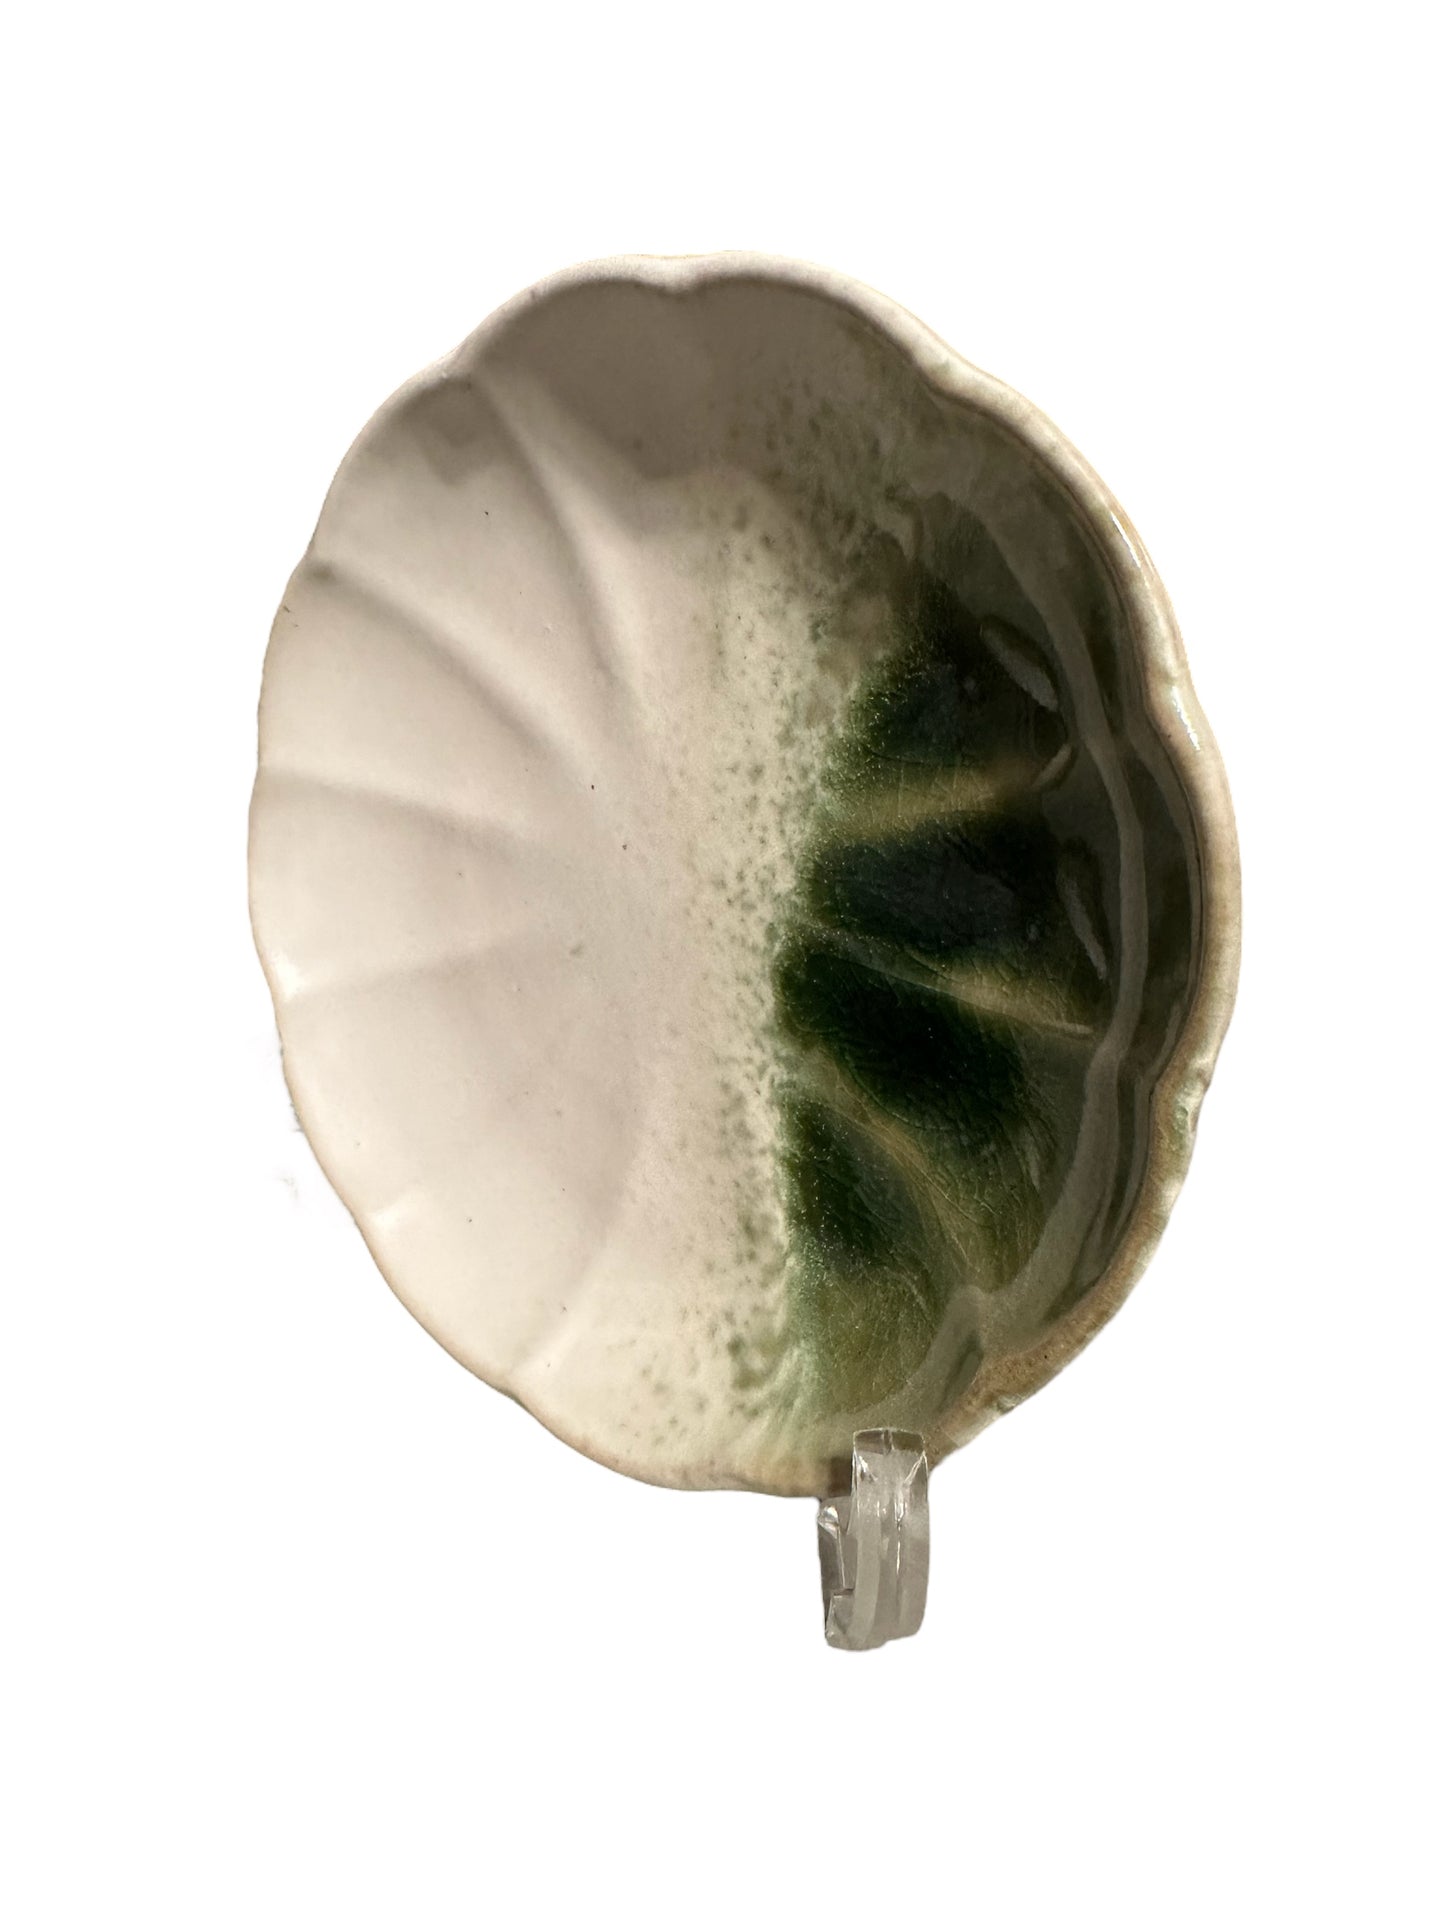 Round green grazed on white saucer Size 5.5" x 1" height